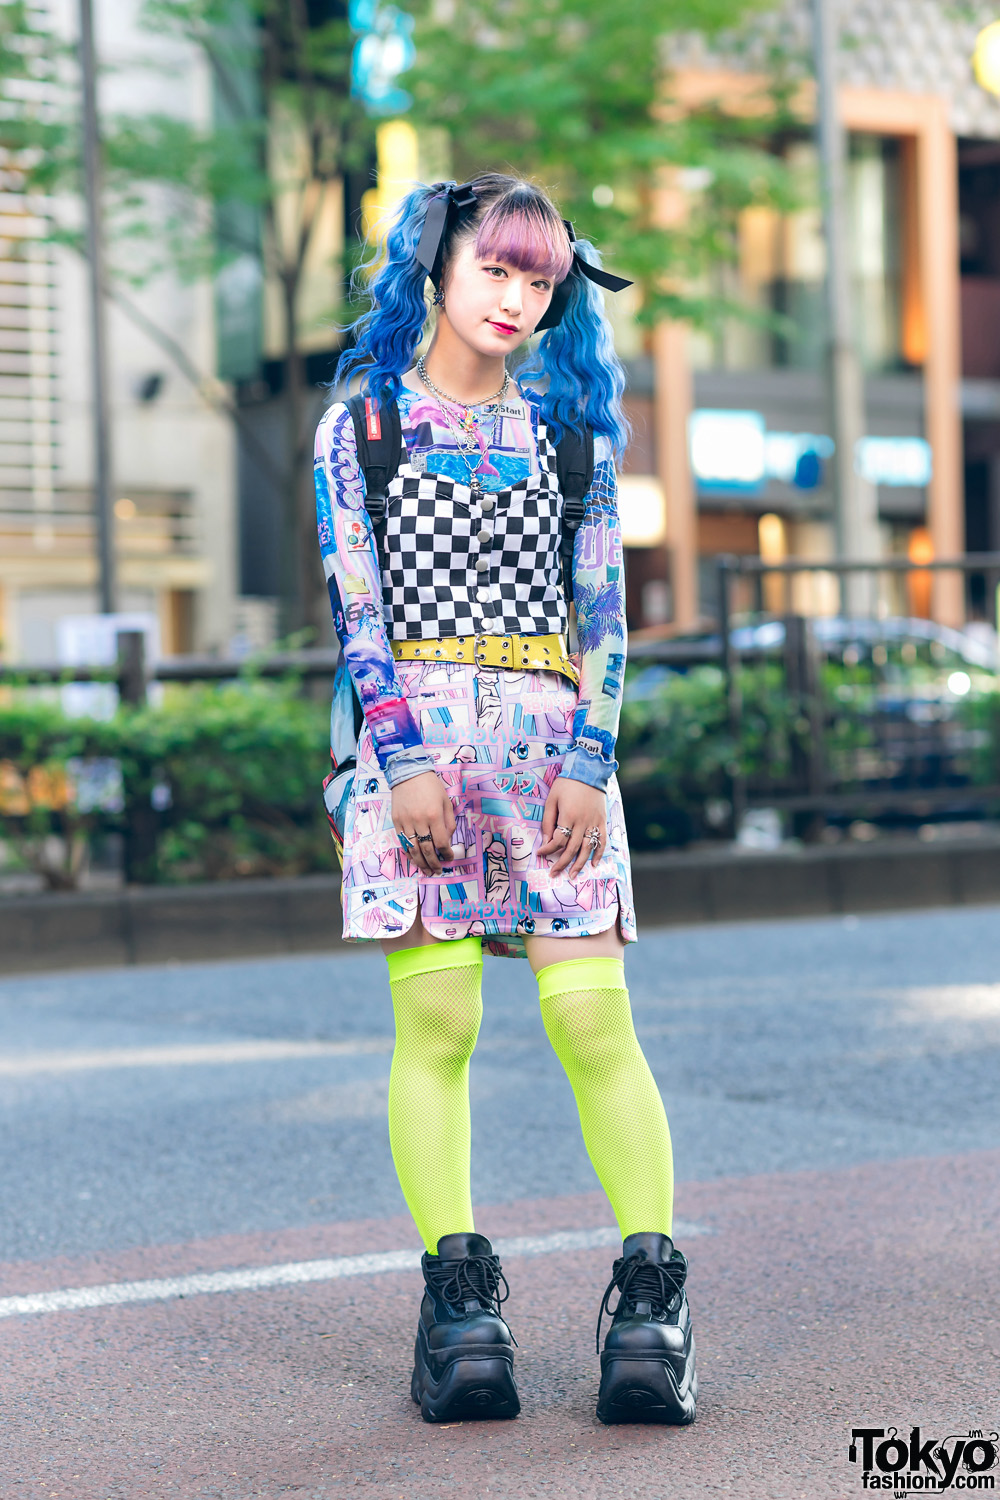 Harajuku Girl's Graphic Street Style w/ Blue Twin Tails, Checkered Top, Manga Skirt, Neon Fishnets, Sprayground Backpack & Demonia Platforms